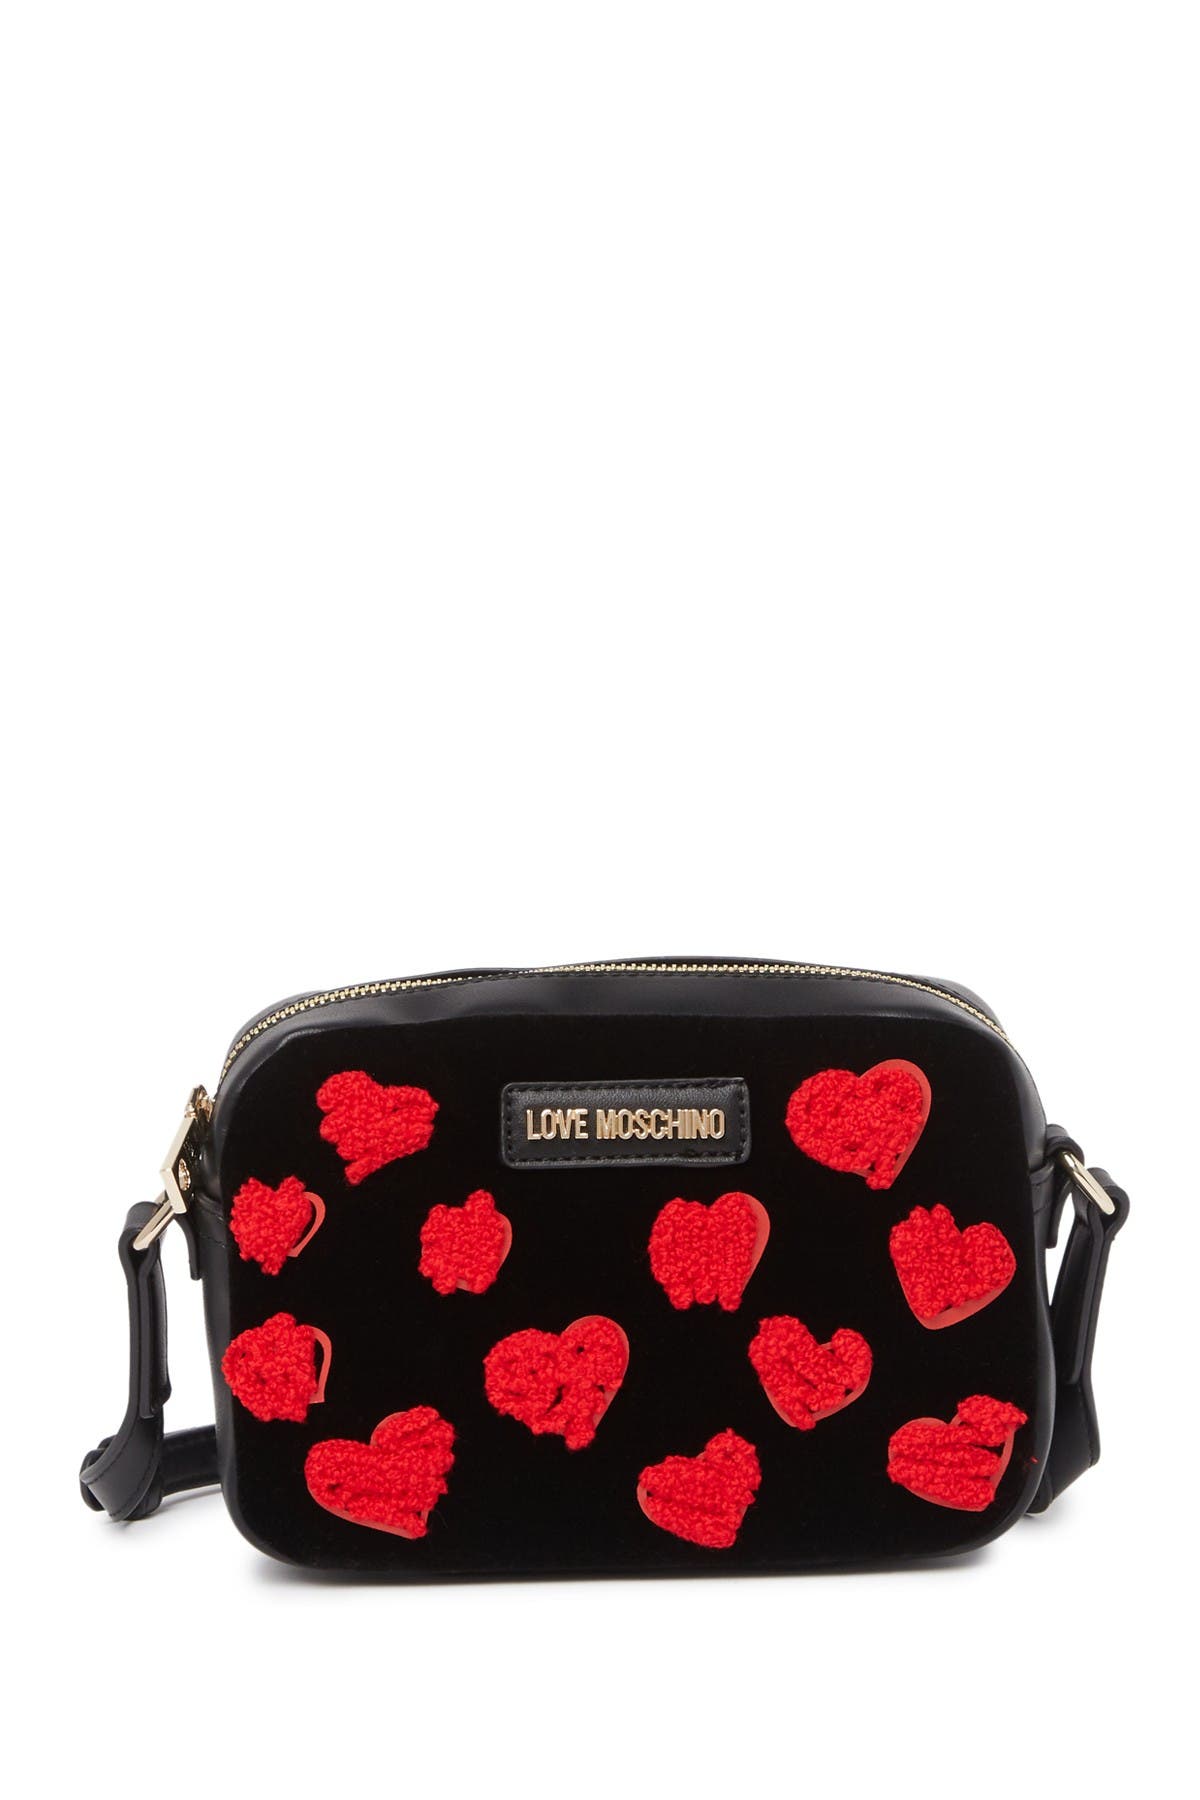 love moschino bag heart